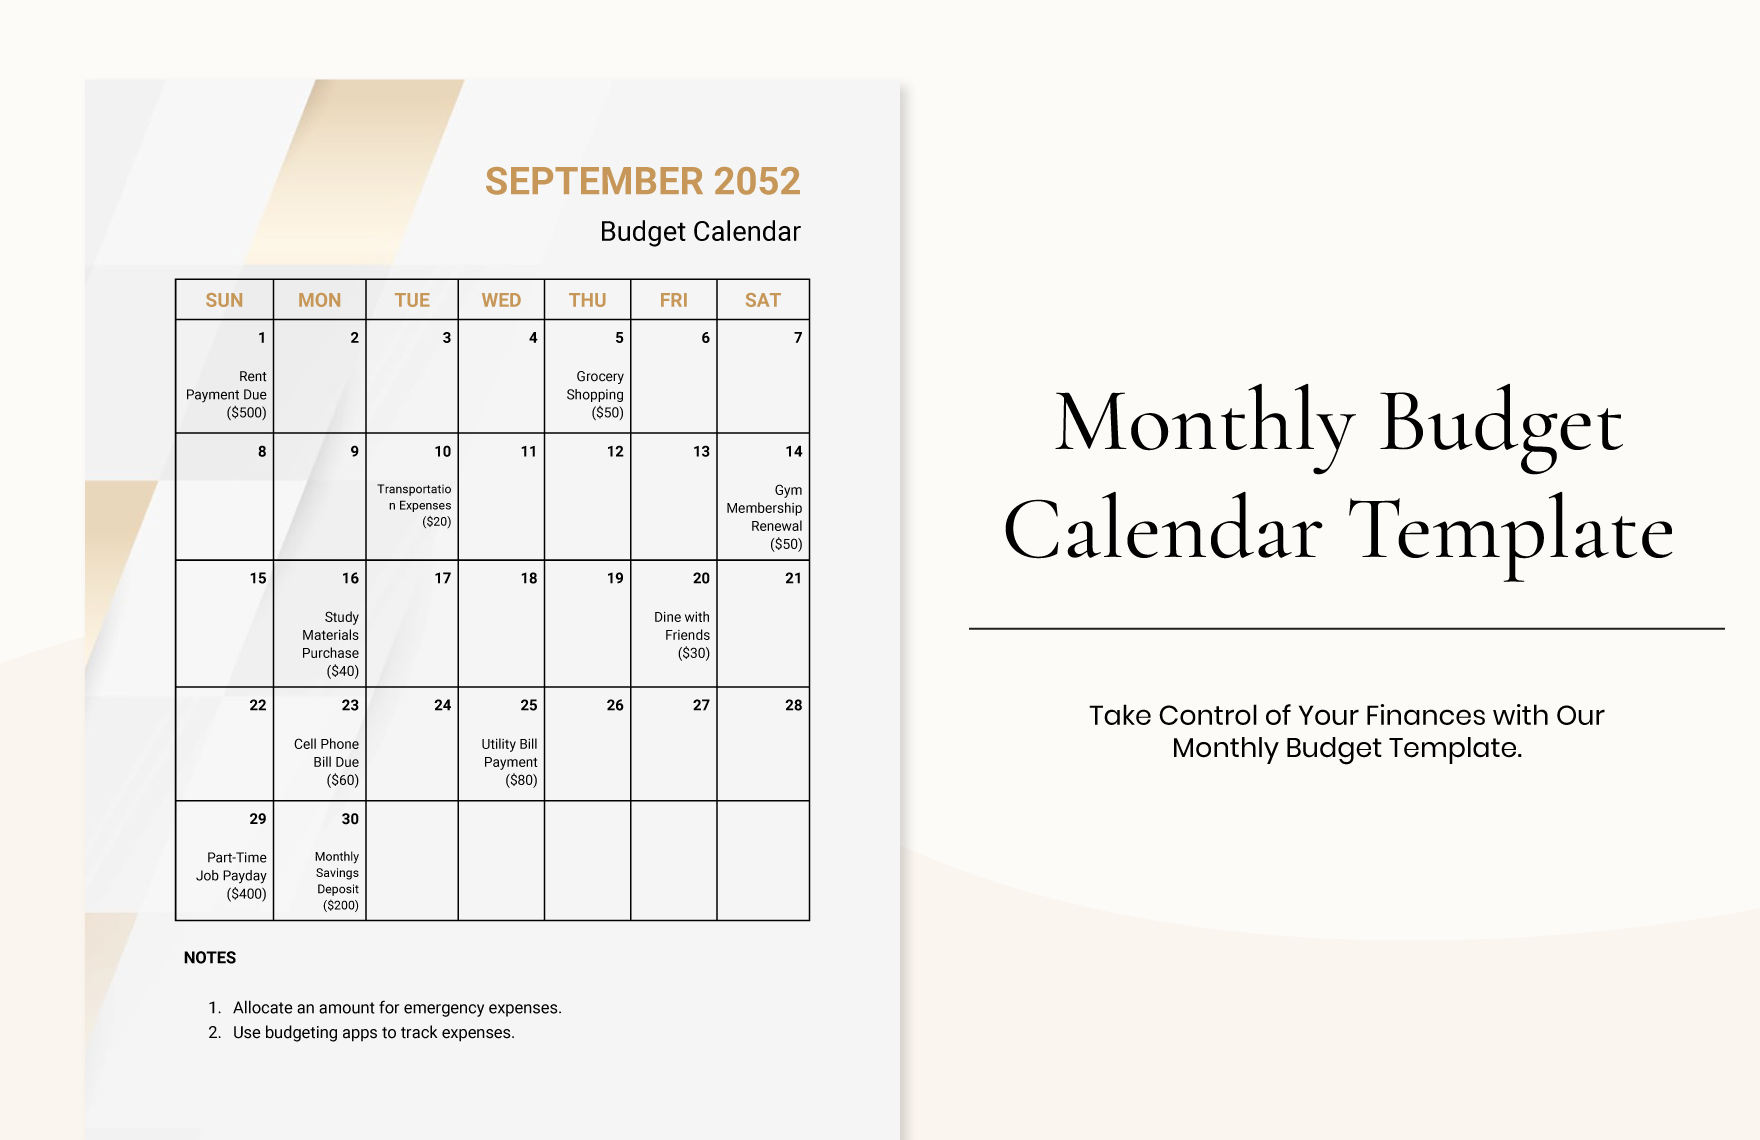 Monthly Budget Calendar Template Word, Google Docs, Excel, PDF